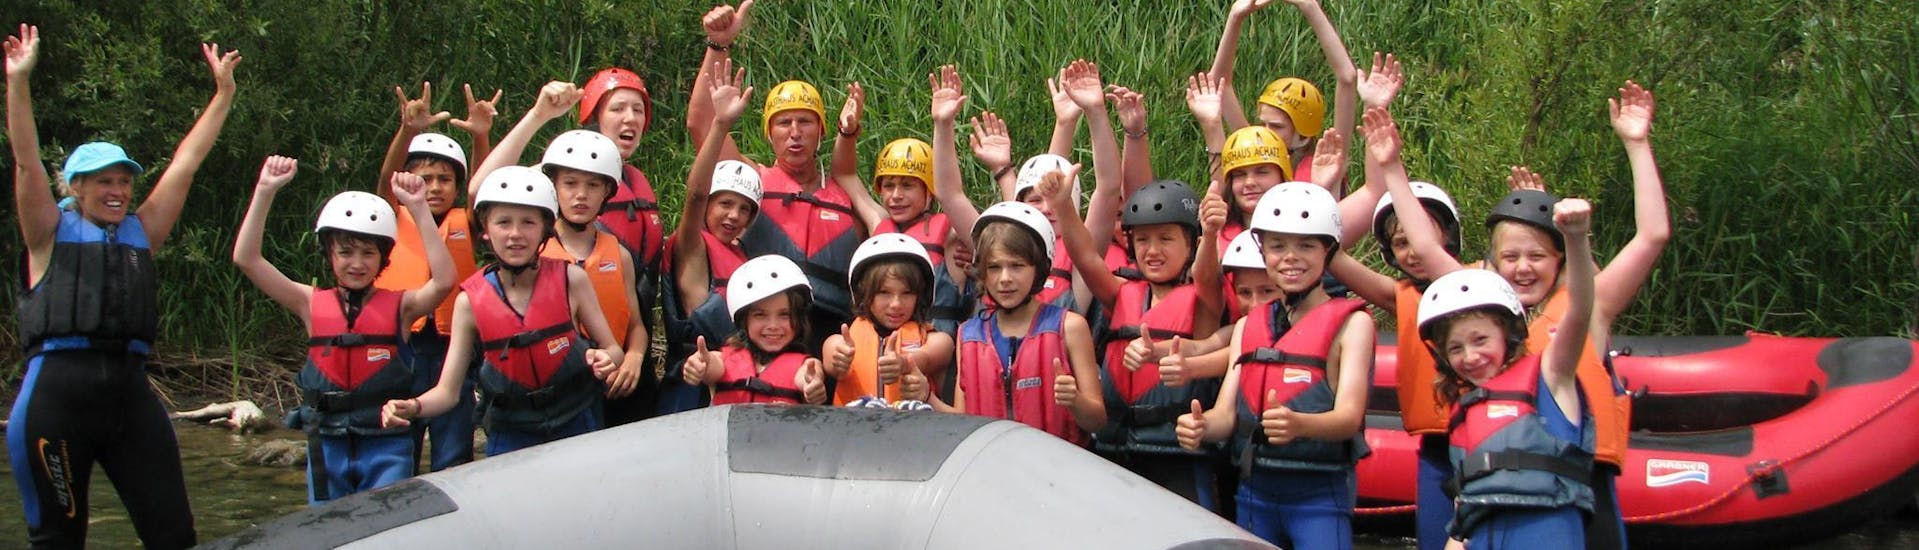 rafting-for-families-gail-rafting-carnica-hero